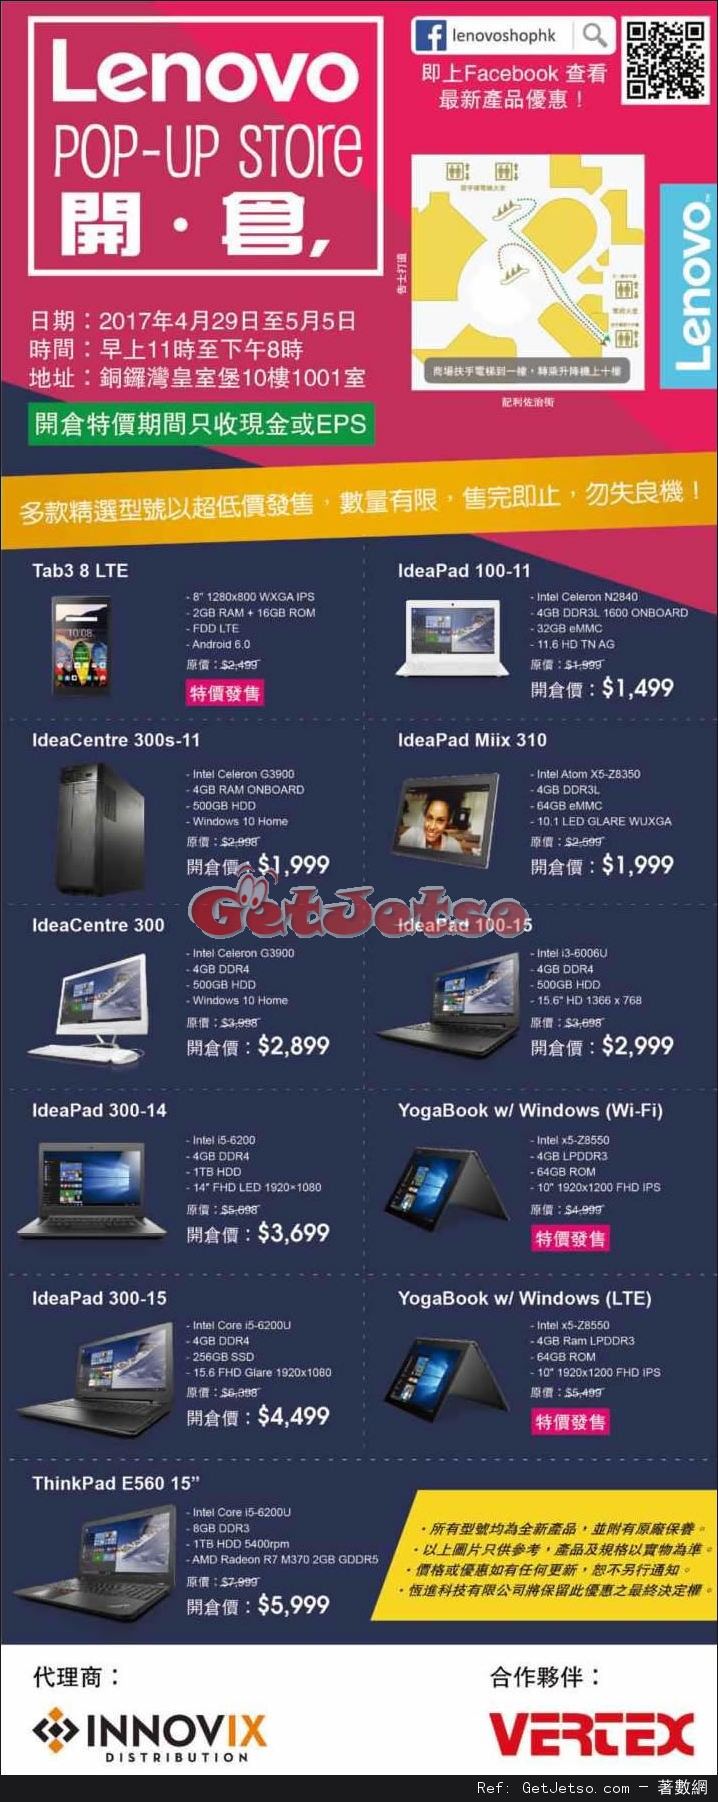 Lenovo Pop-up Store開倉優惠(至17年4月29-5月5日)圖片1